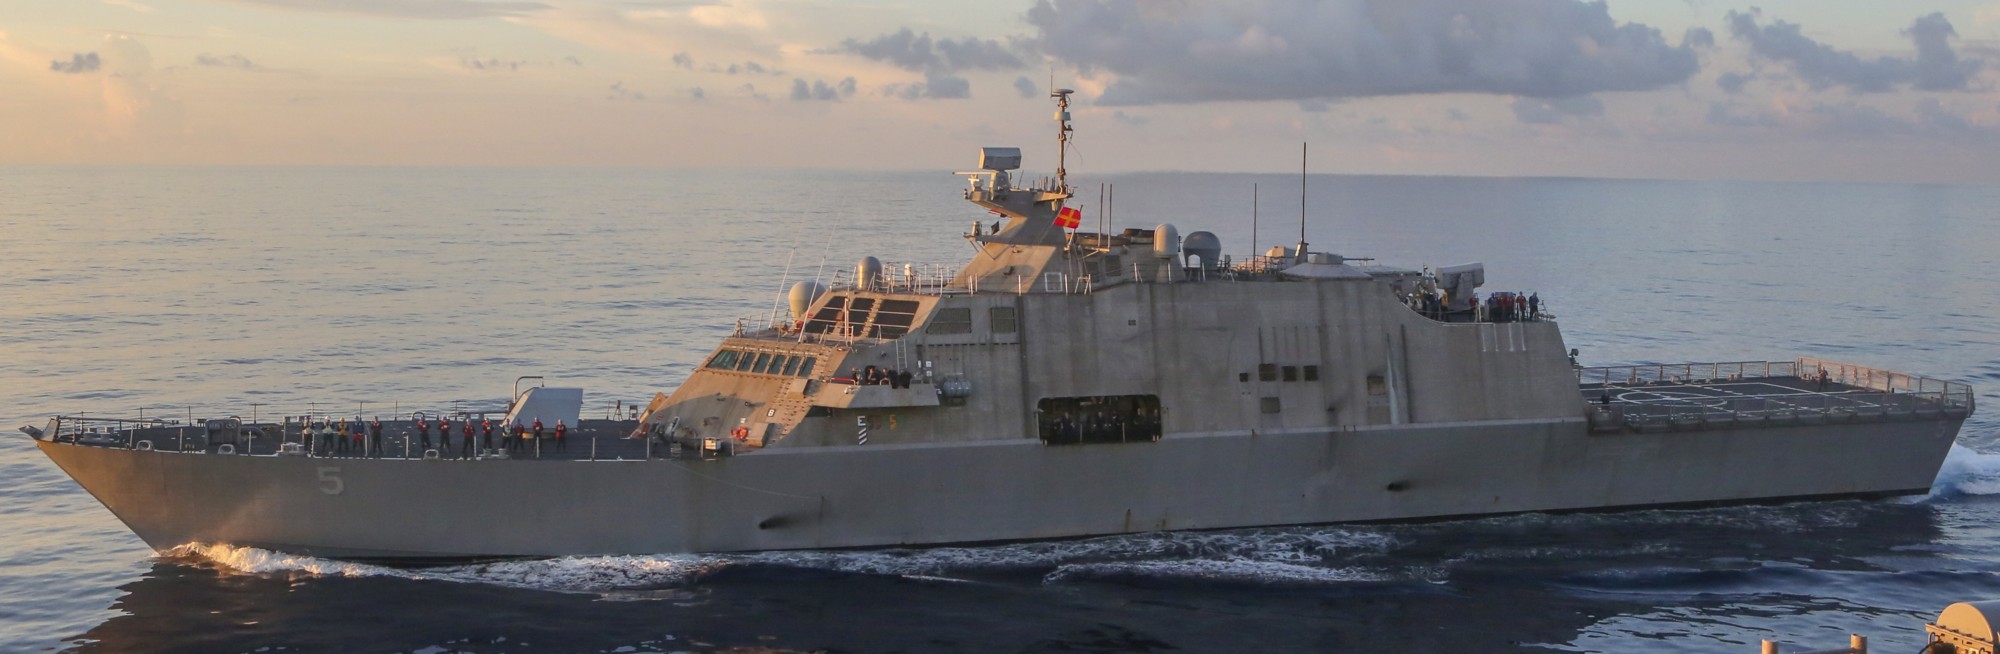 lcs-5 uss milwaukee freedom class littoral combat ship us navy 54 atlantic ocean